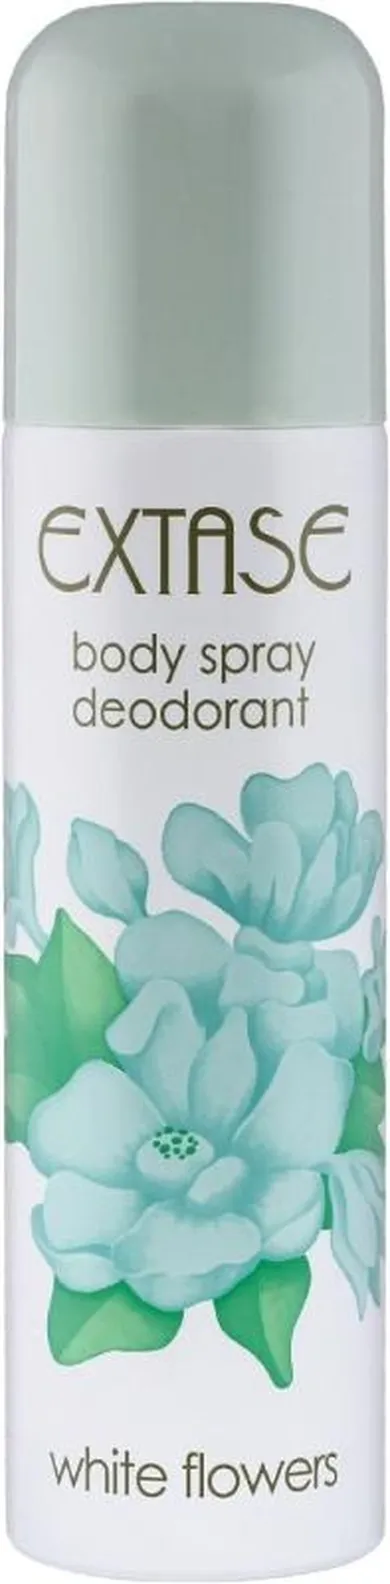 Extase, dezodorant, body spray, white flowers, 150 ml